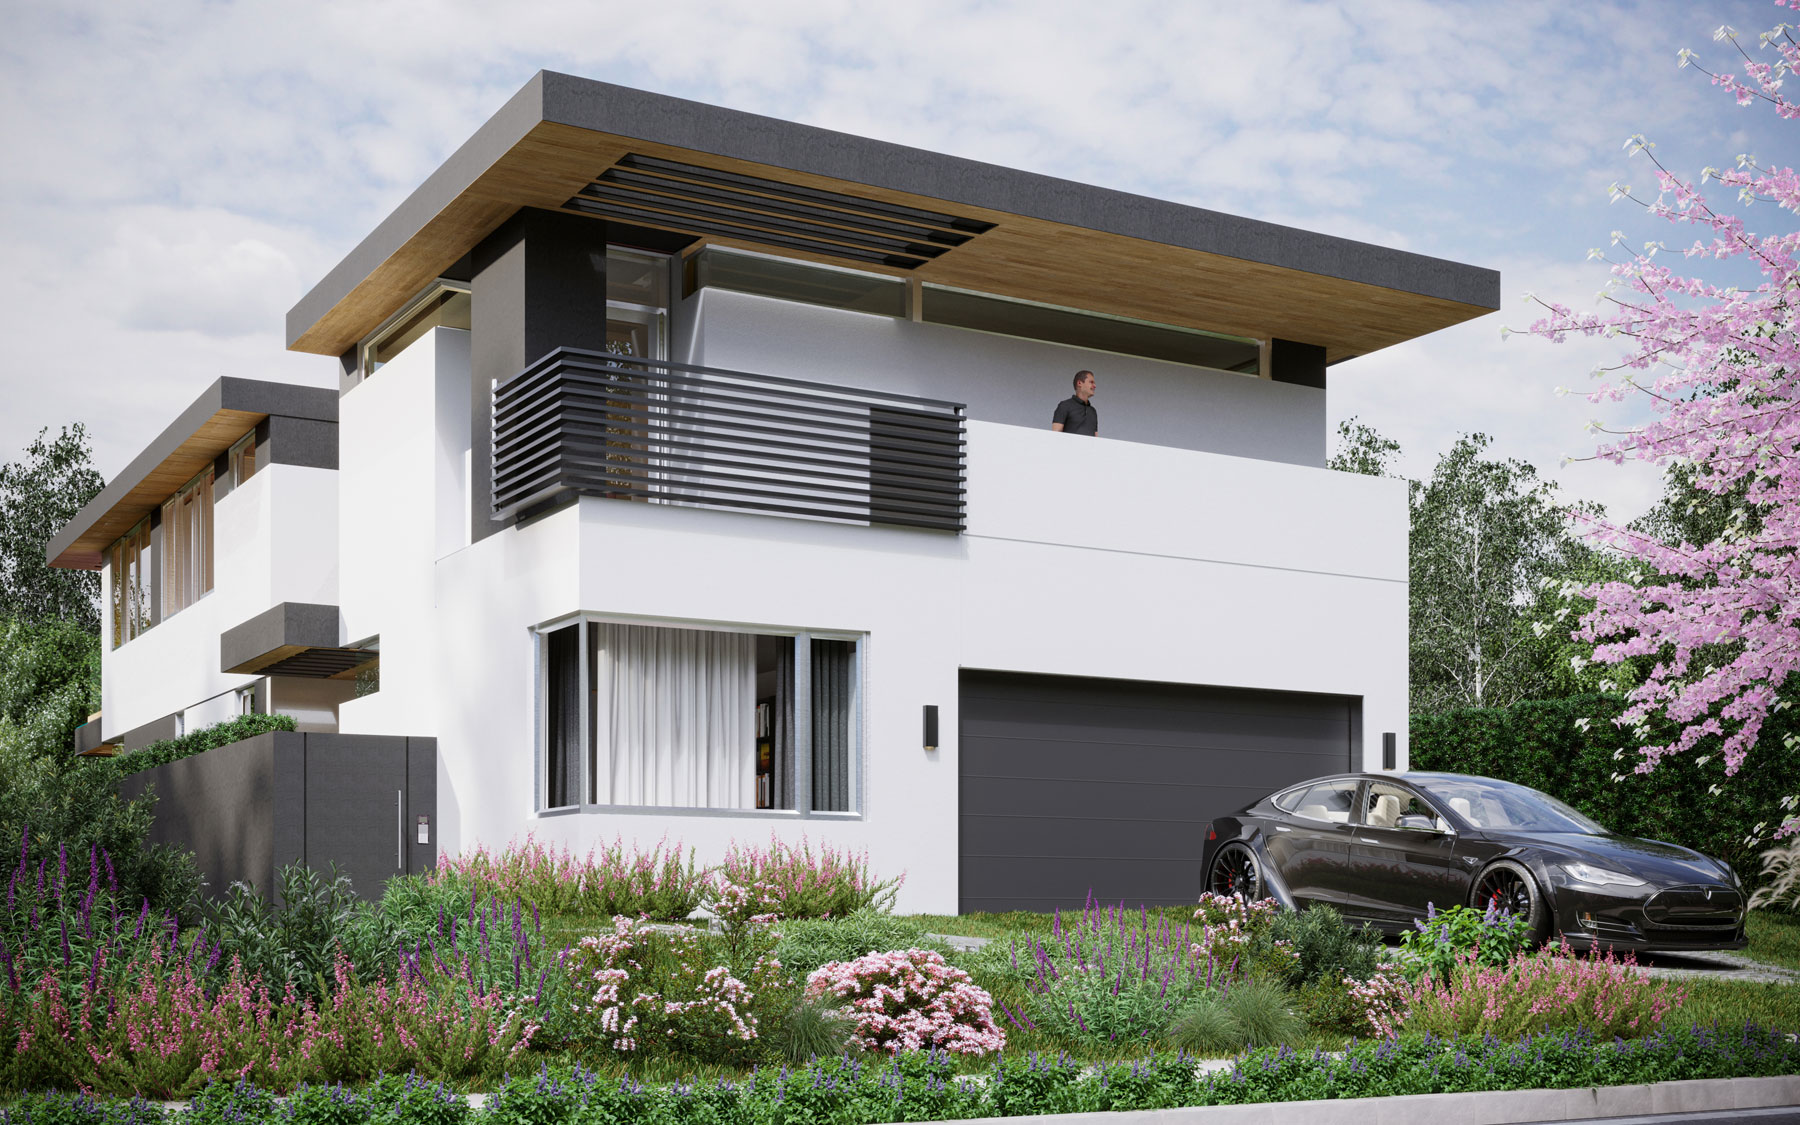 Rendering of California Modern Design-Build Architect in LA rendering of new home design